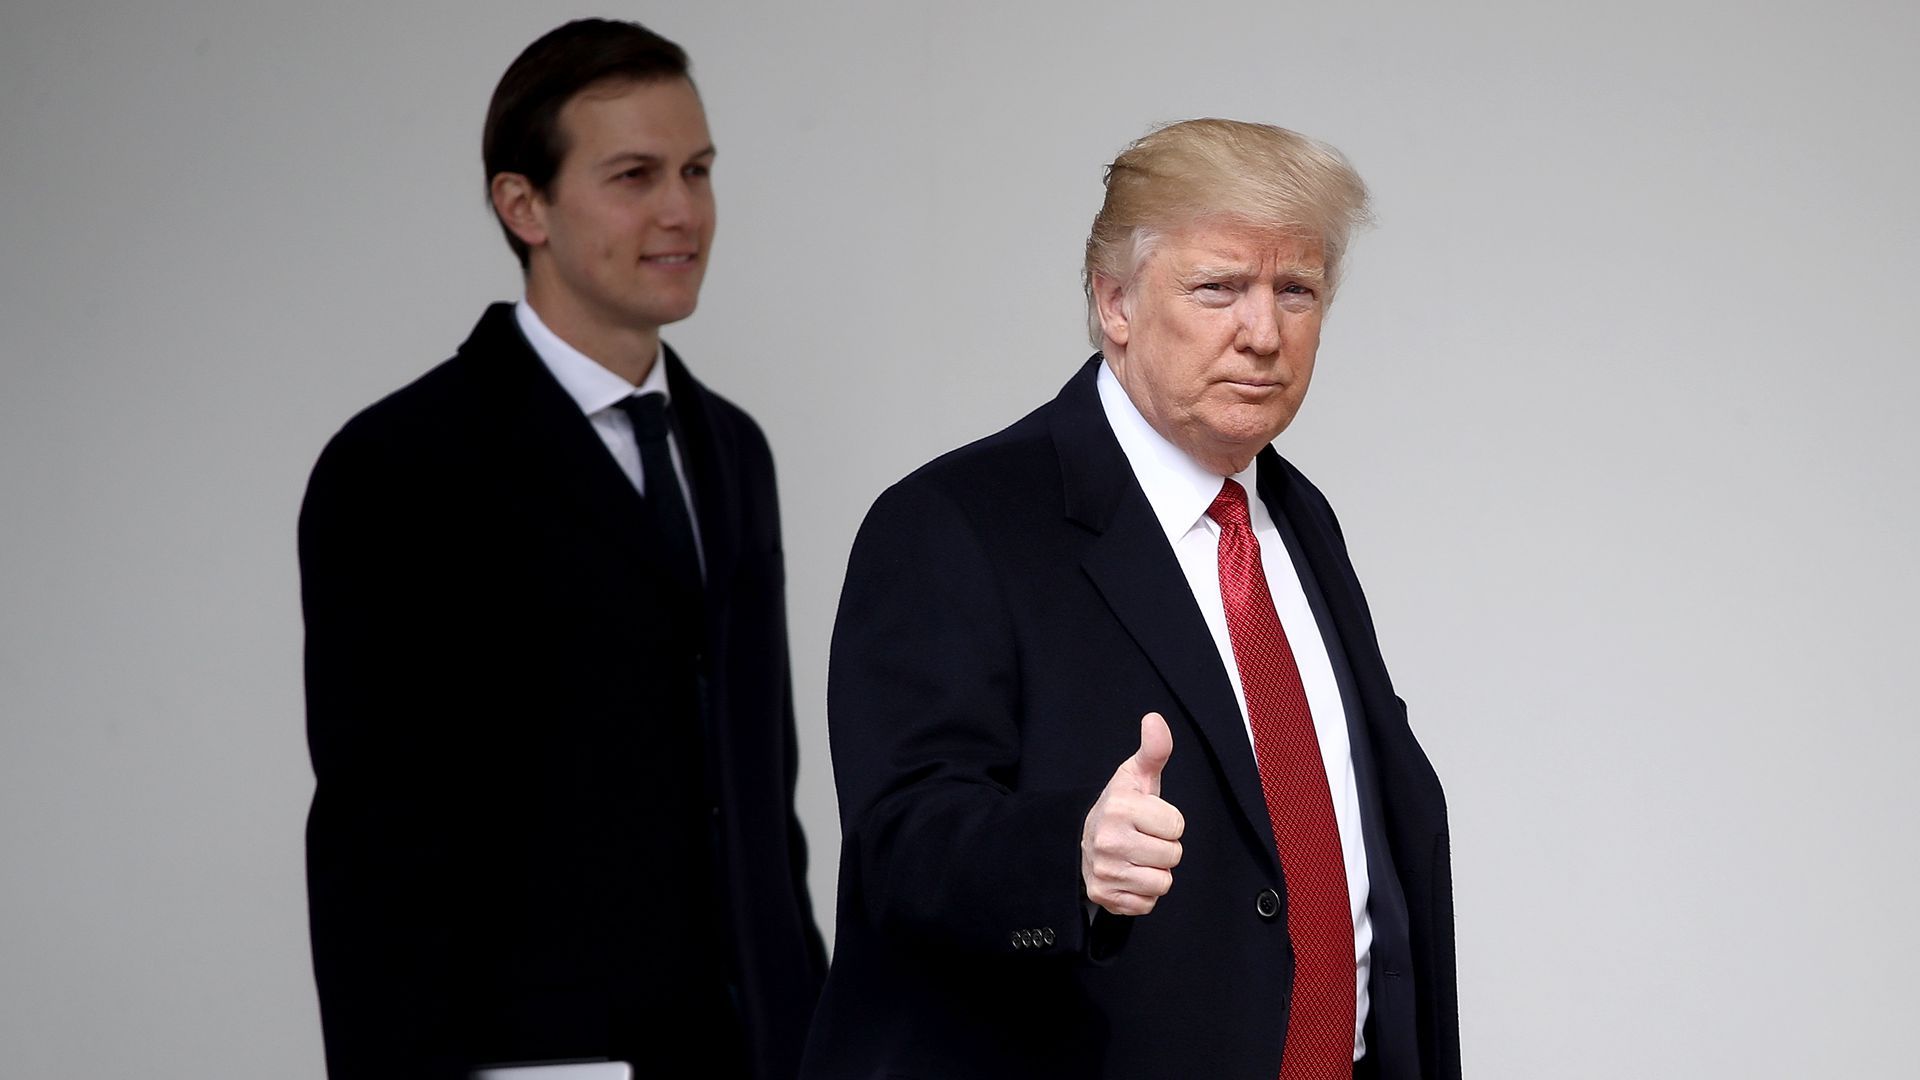 President Trump gives a thumbs up while walking alongside Jared Kushner